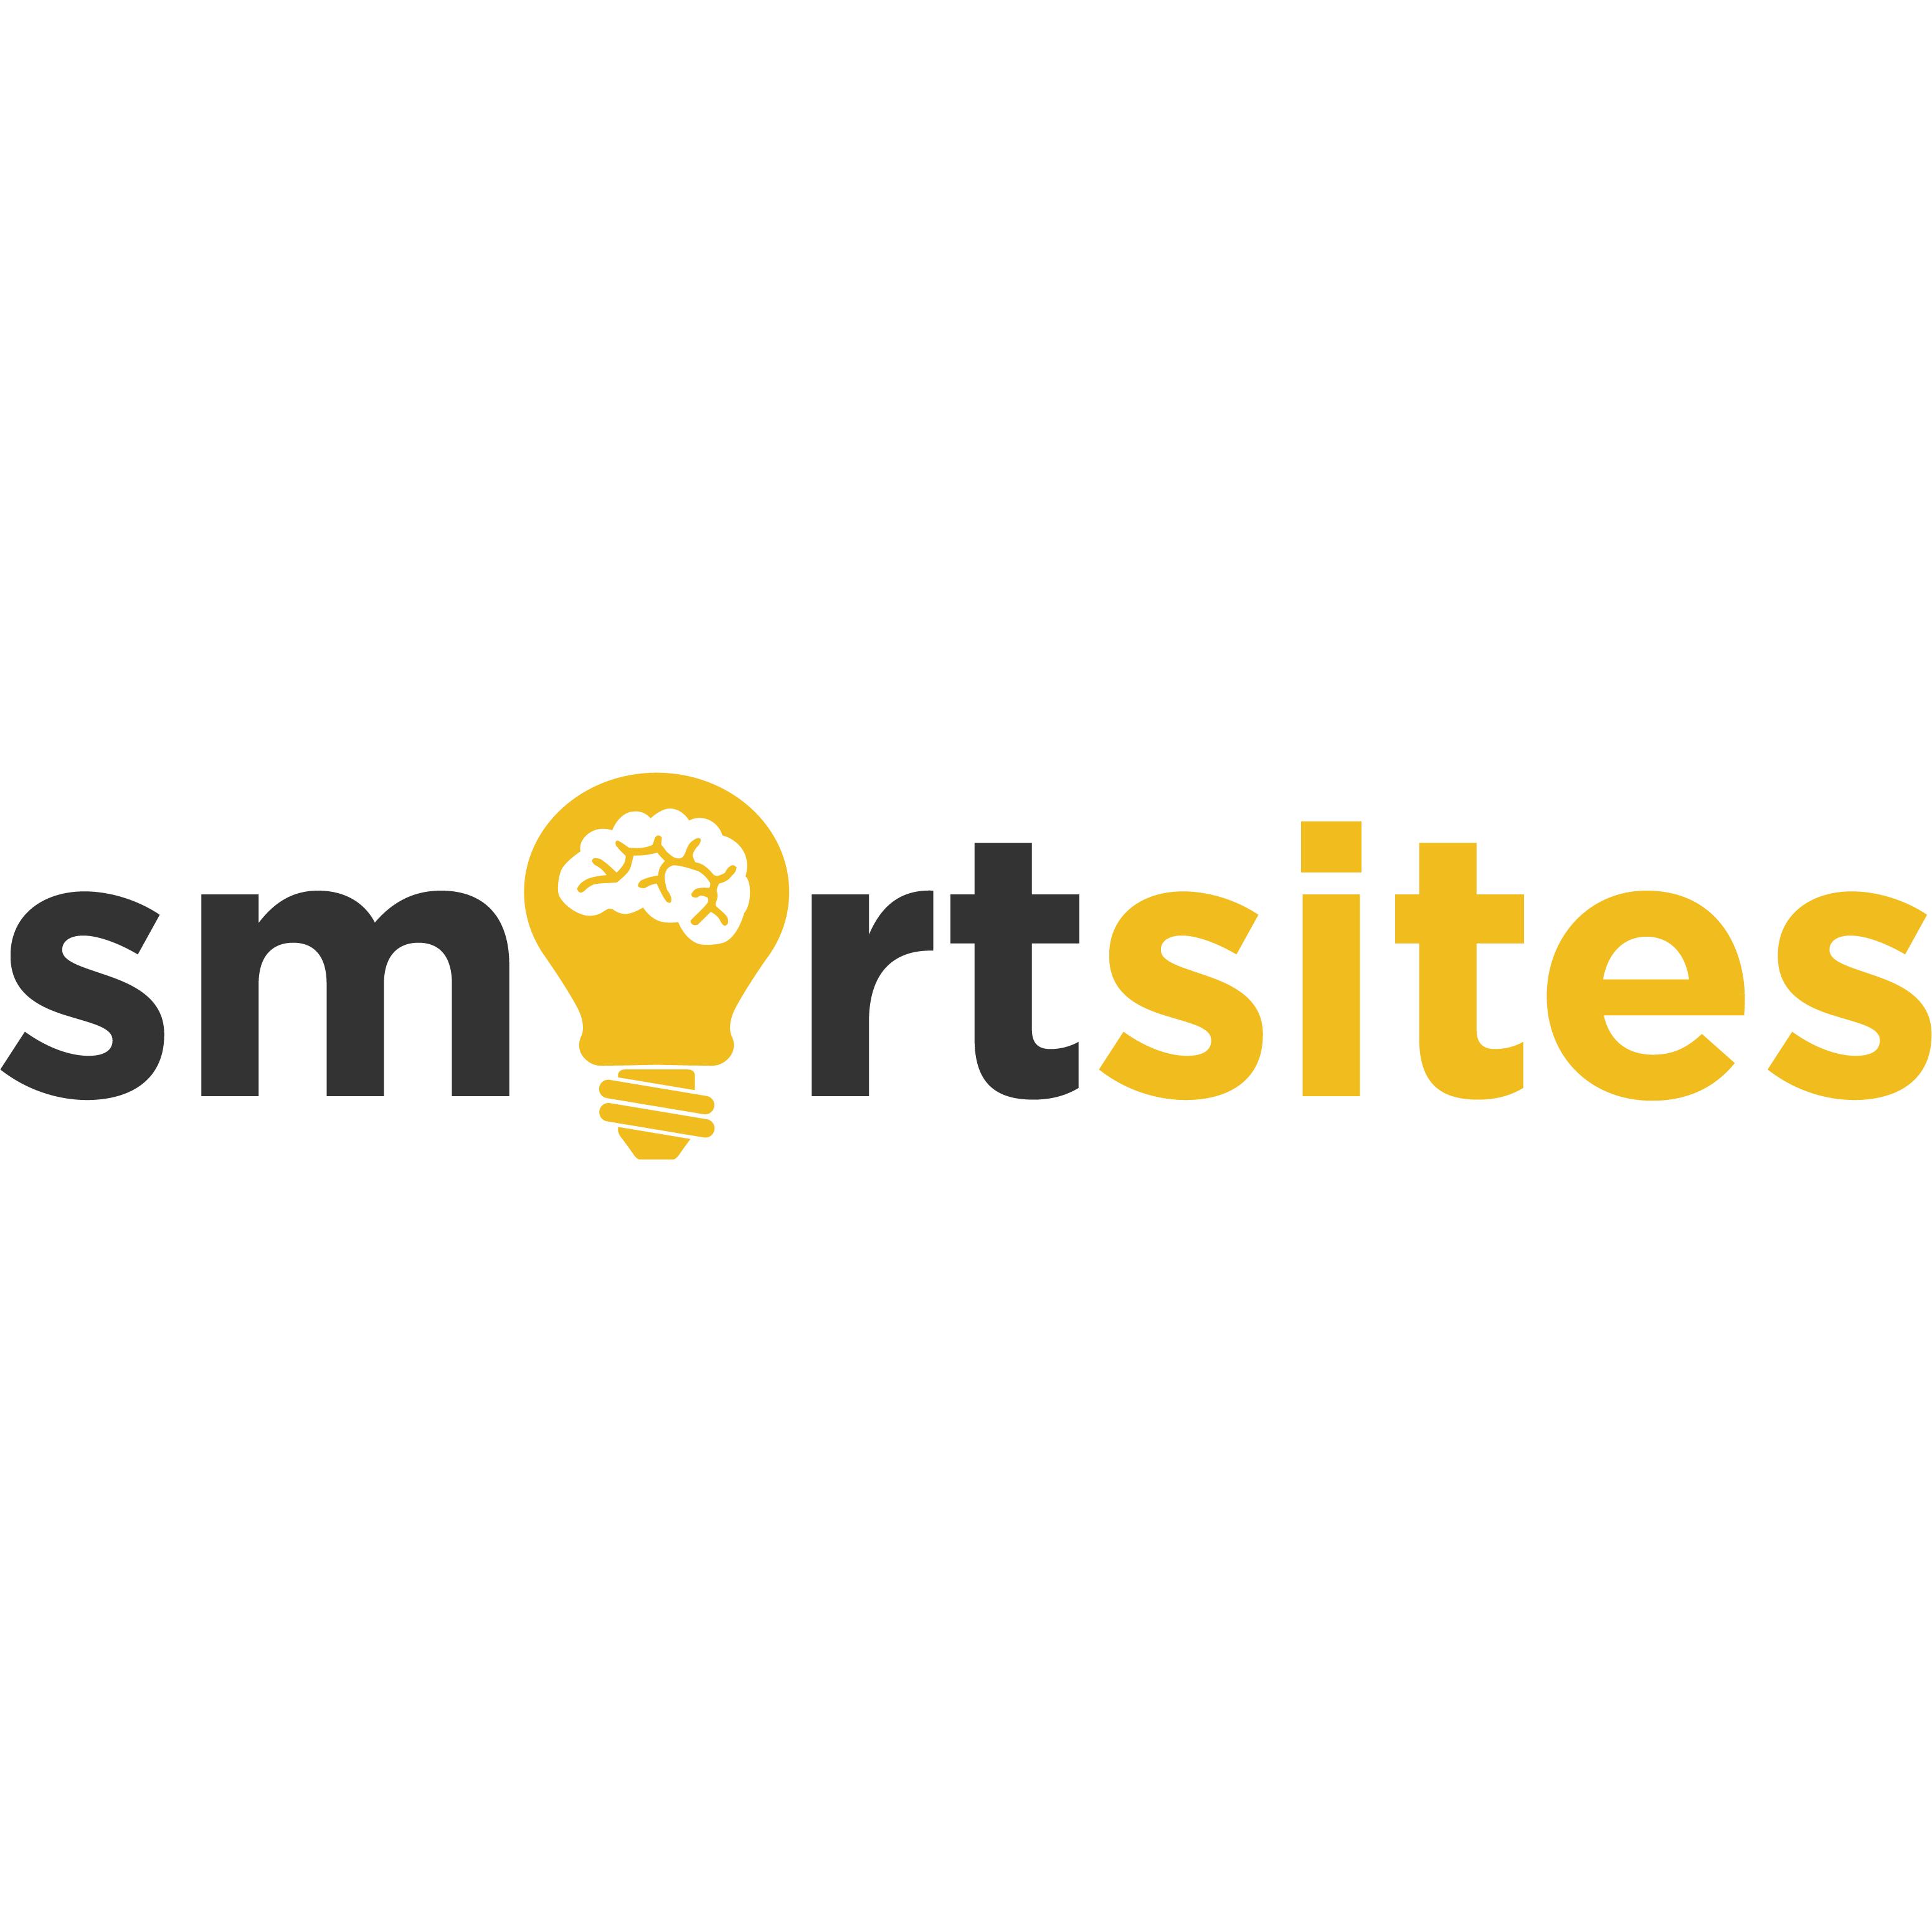 Top Youtube Pay-Per-Click Business Logo: SmartSites